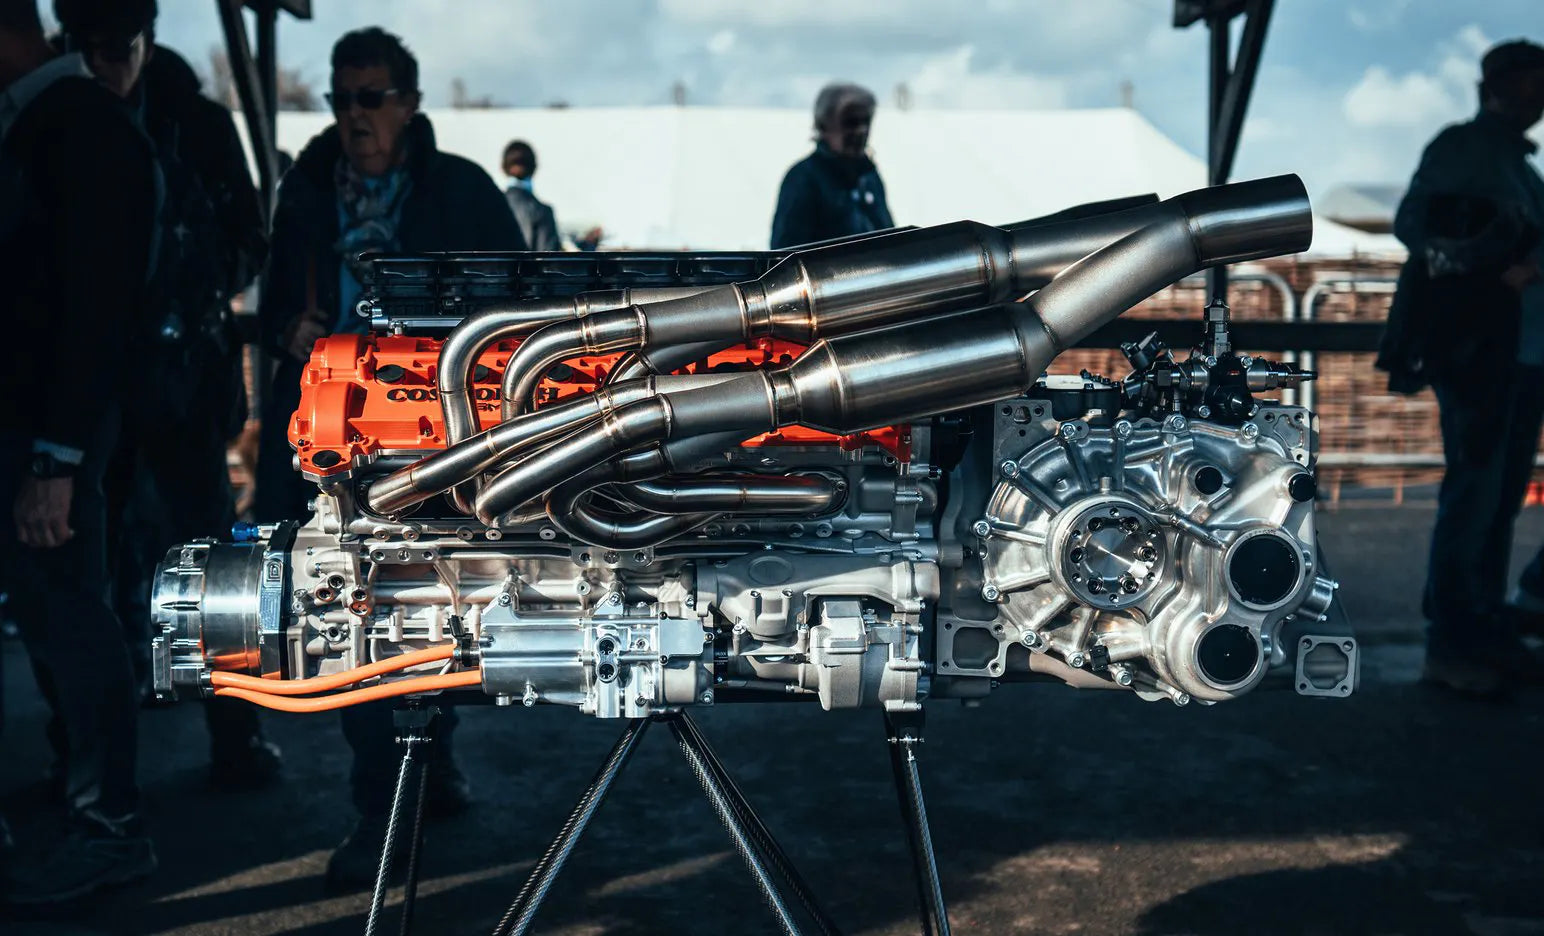 Cosworth V12 654bhp T.50 engine on display